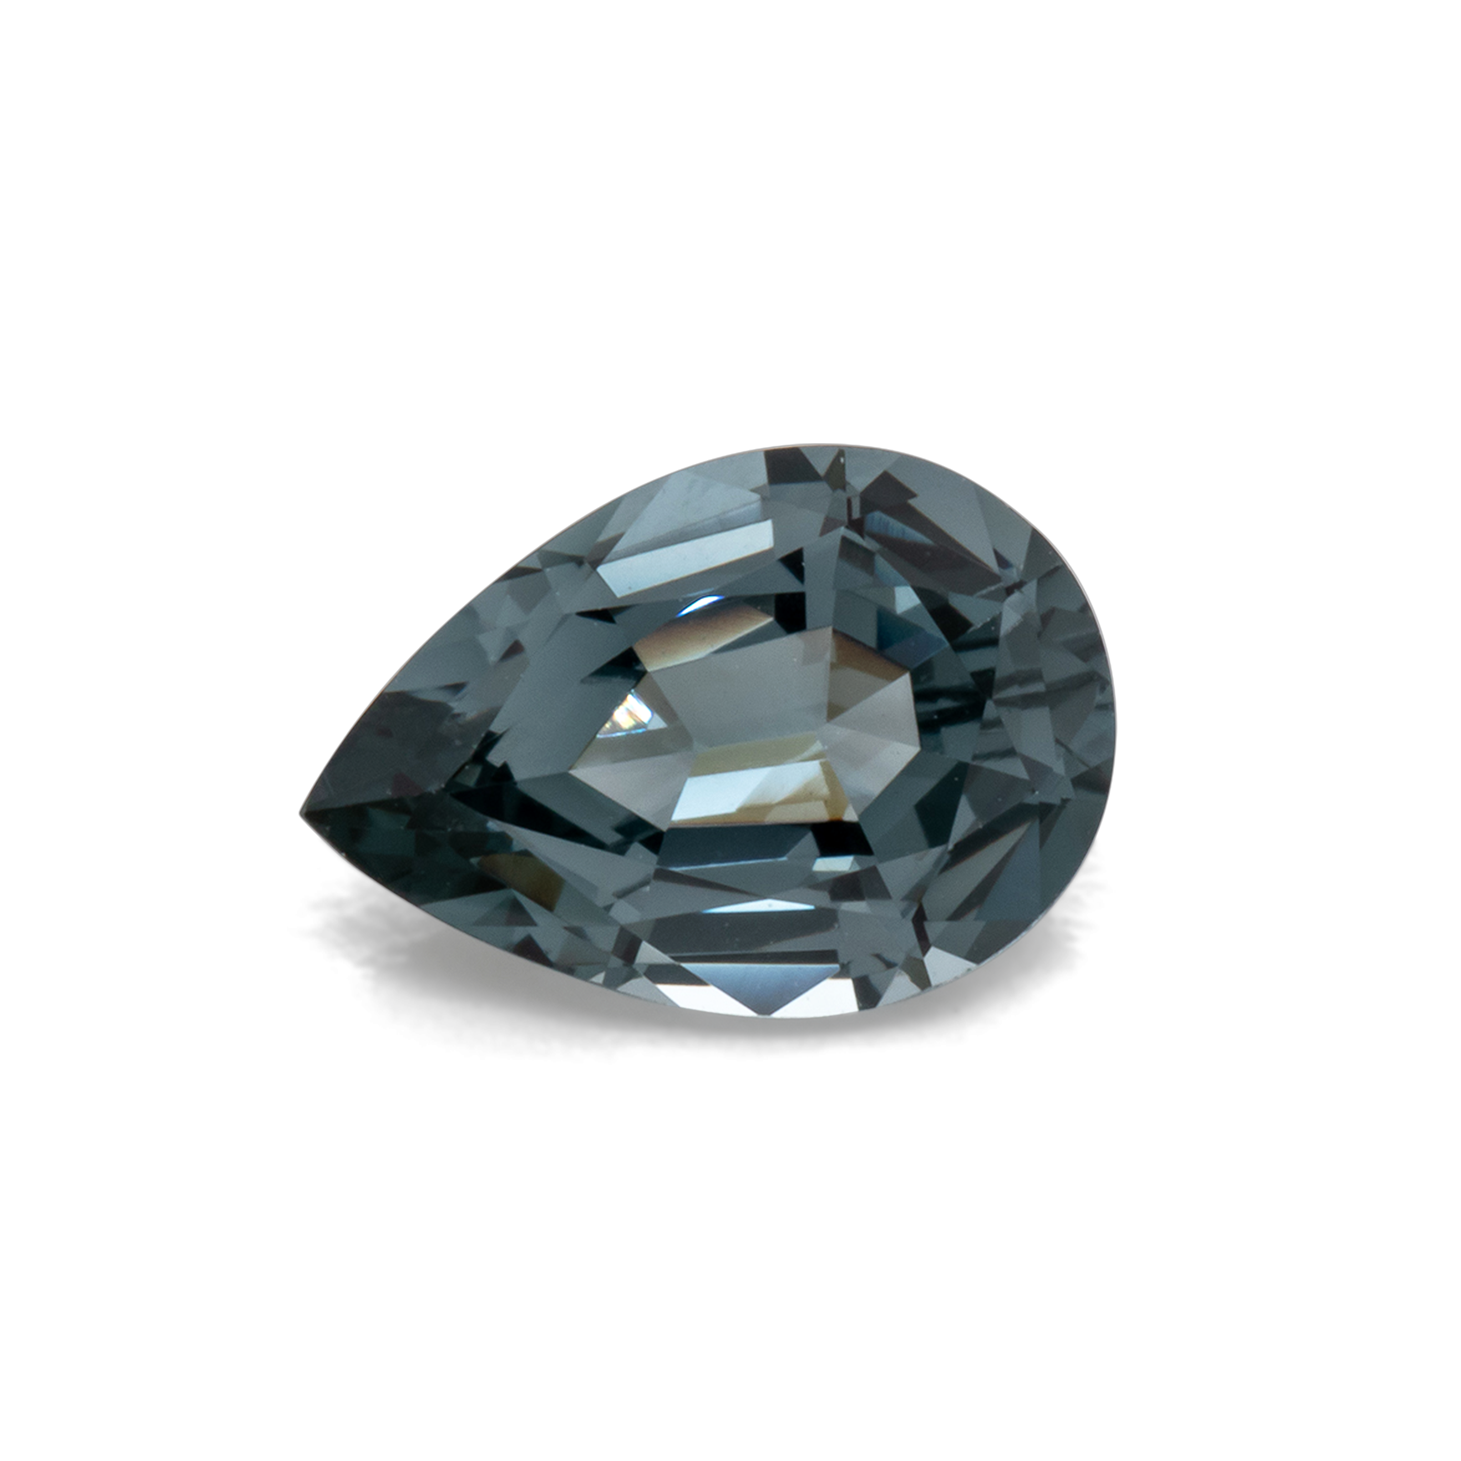 Spinell - grau, birnform, 9.3x6.5 mm, 1.60 cts, Nr. SP90046